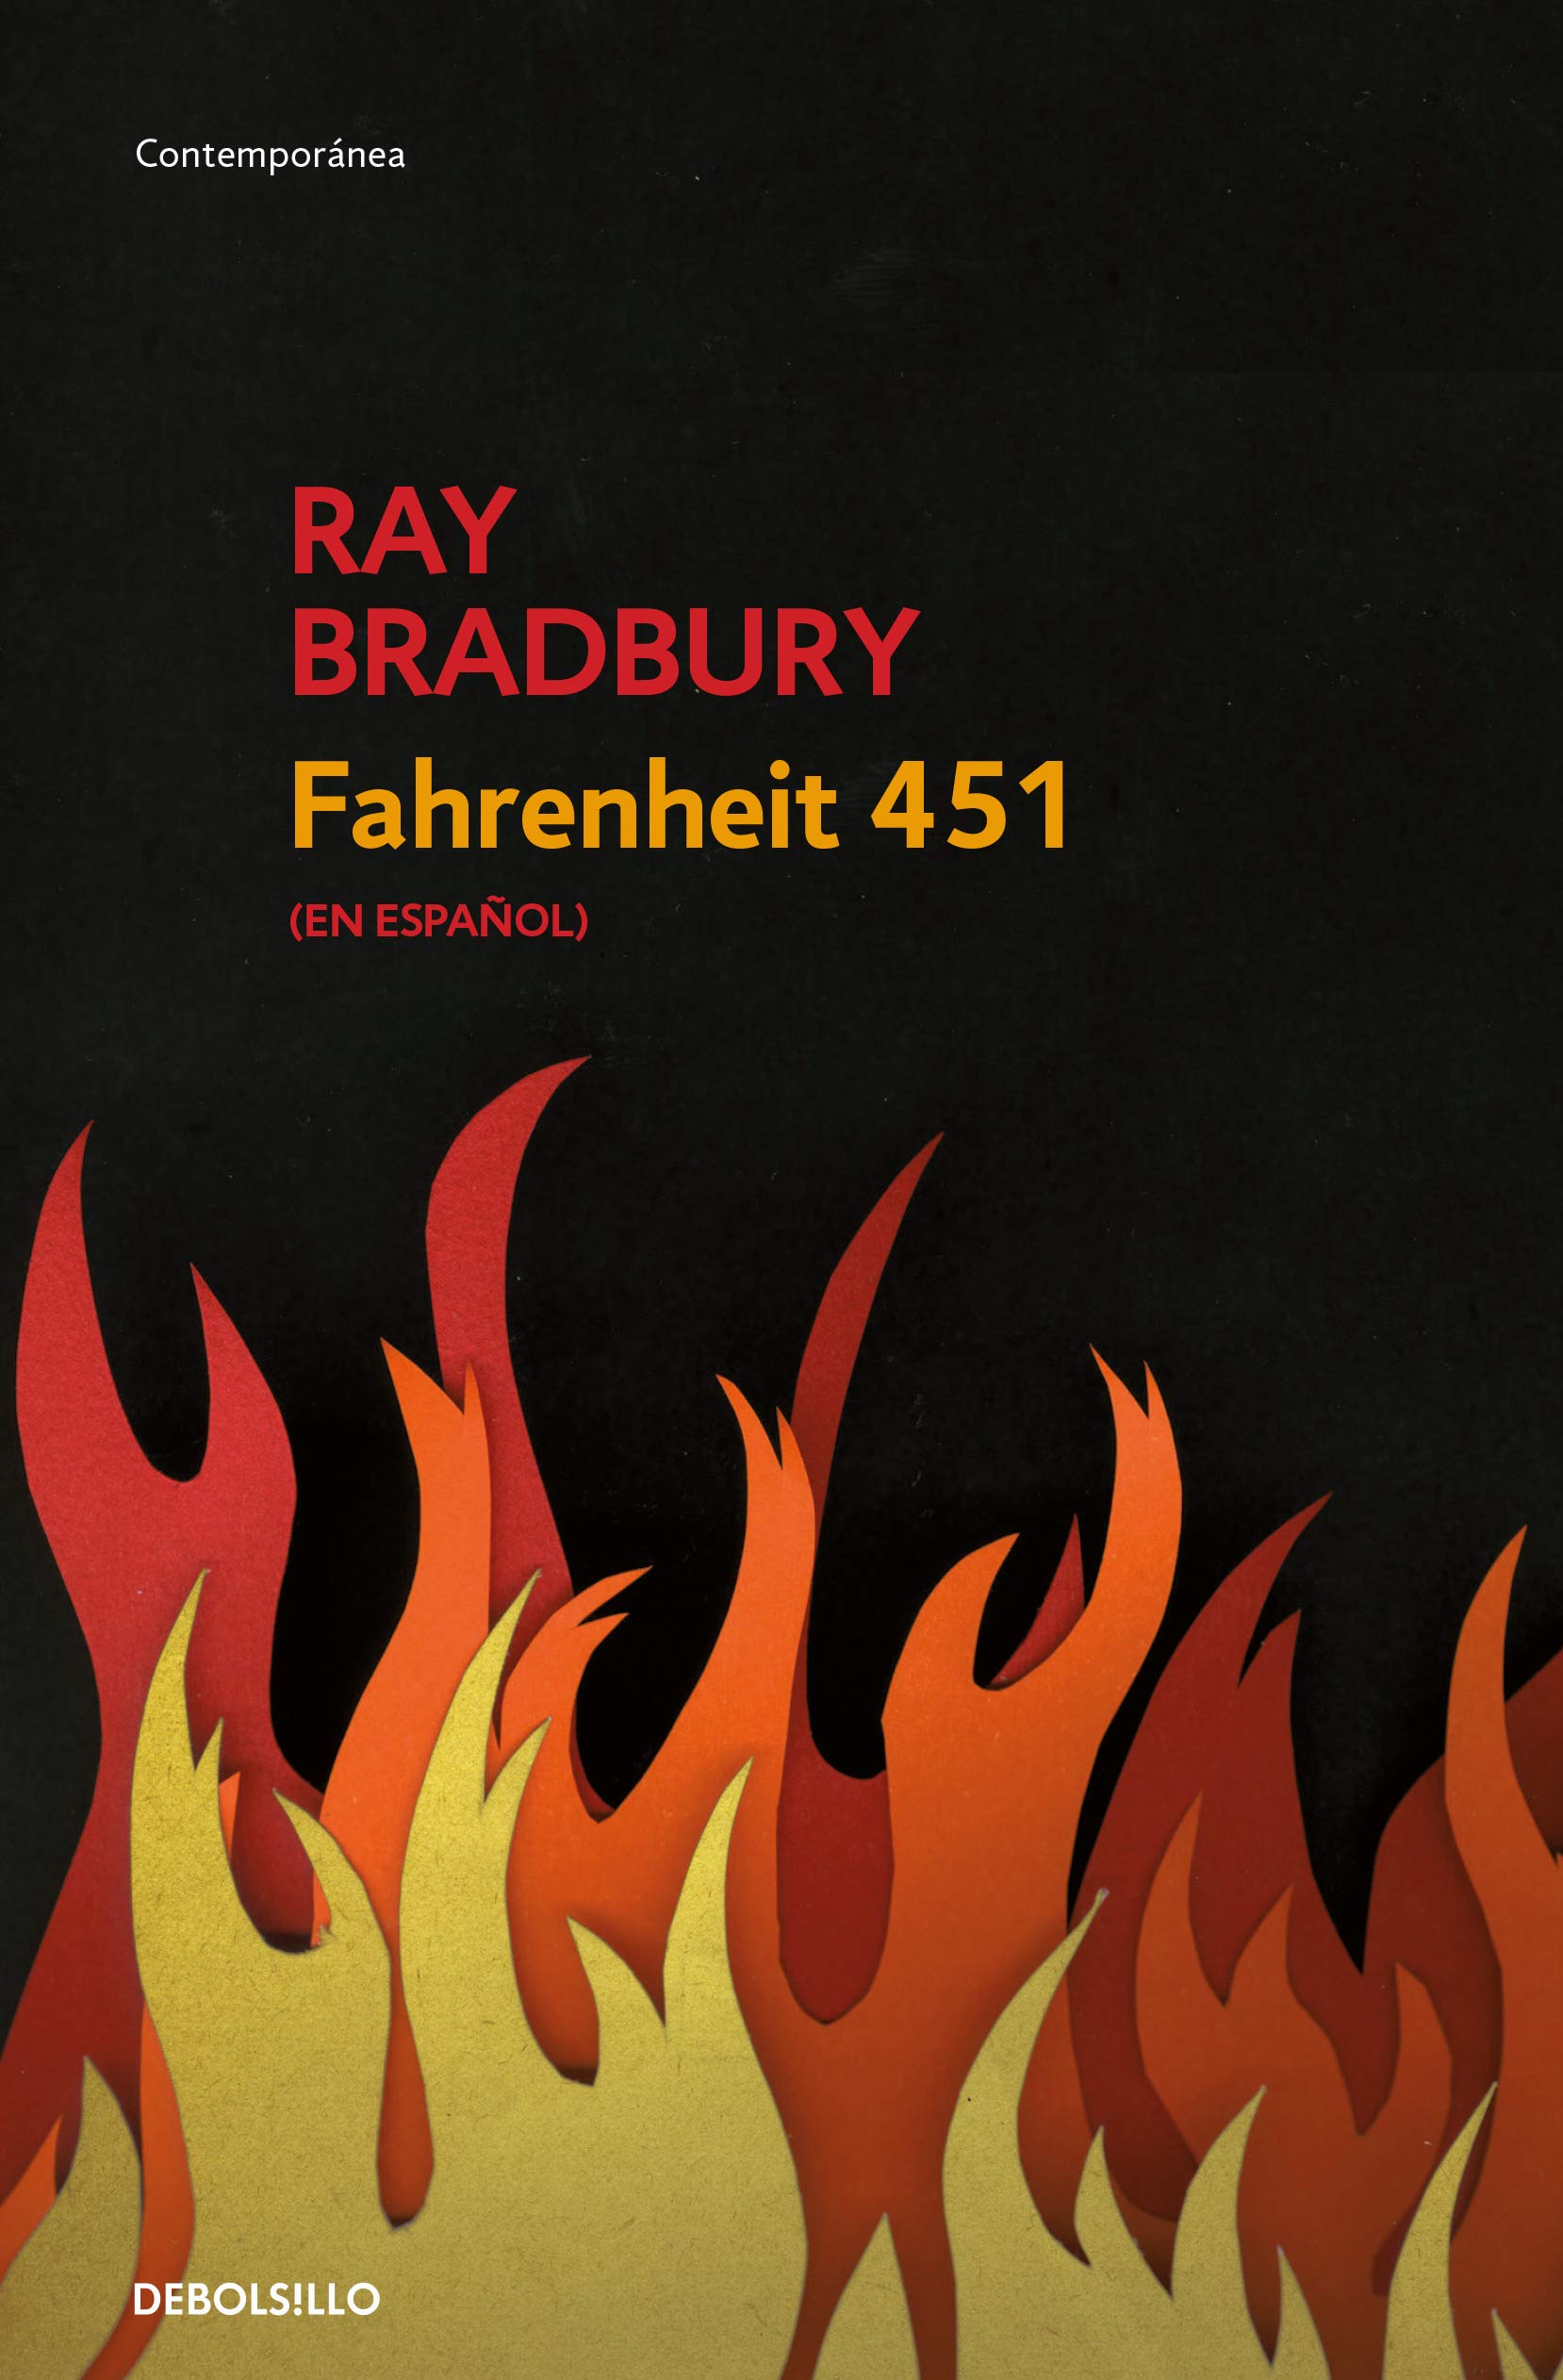 451 градус по фаренгейту в цельсиях. Ray Bradbury "Fahrenheit 451". 451 Degrees Fahrenheit ray Bradbury.